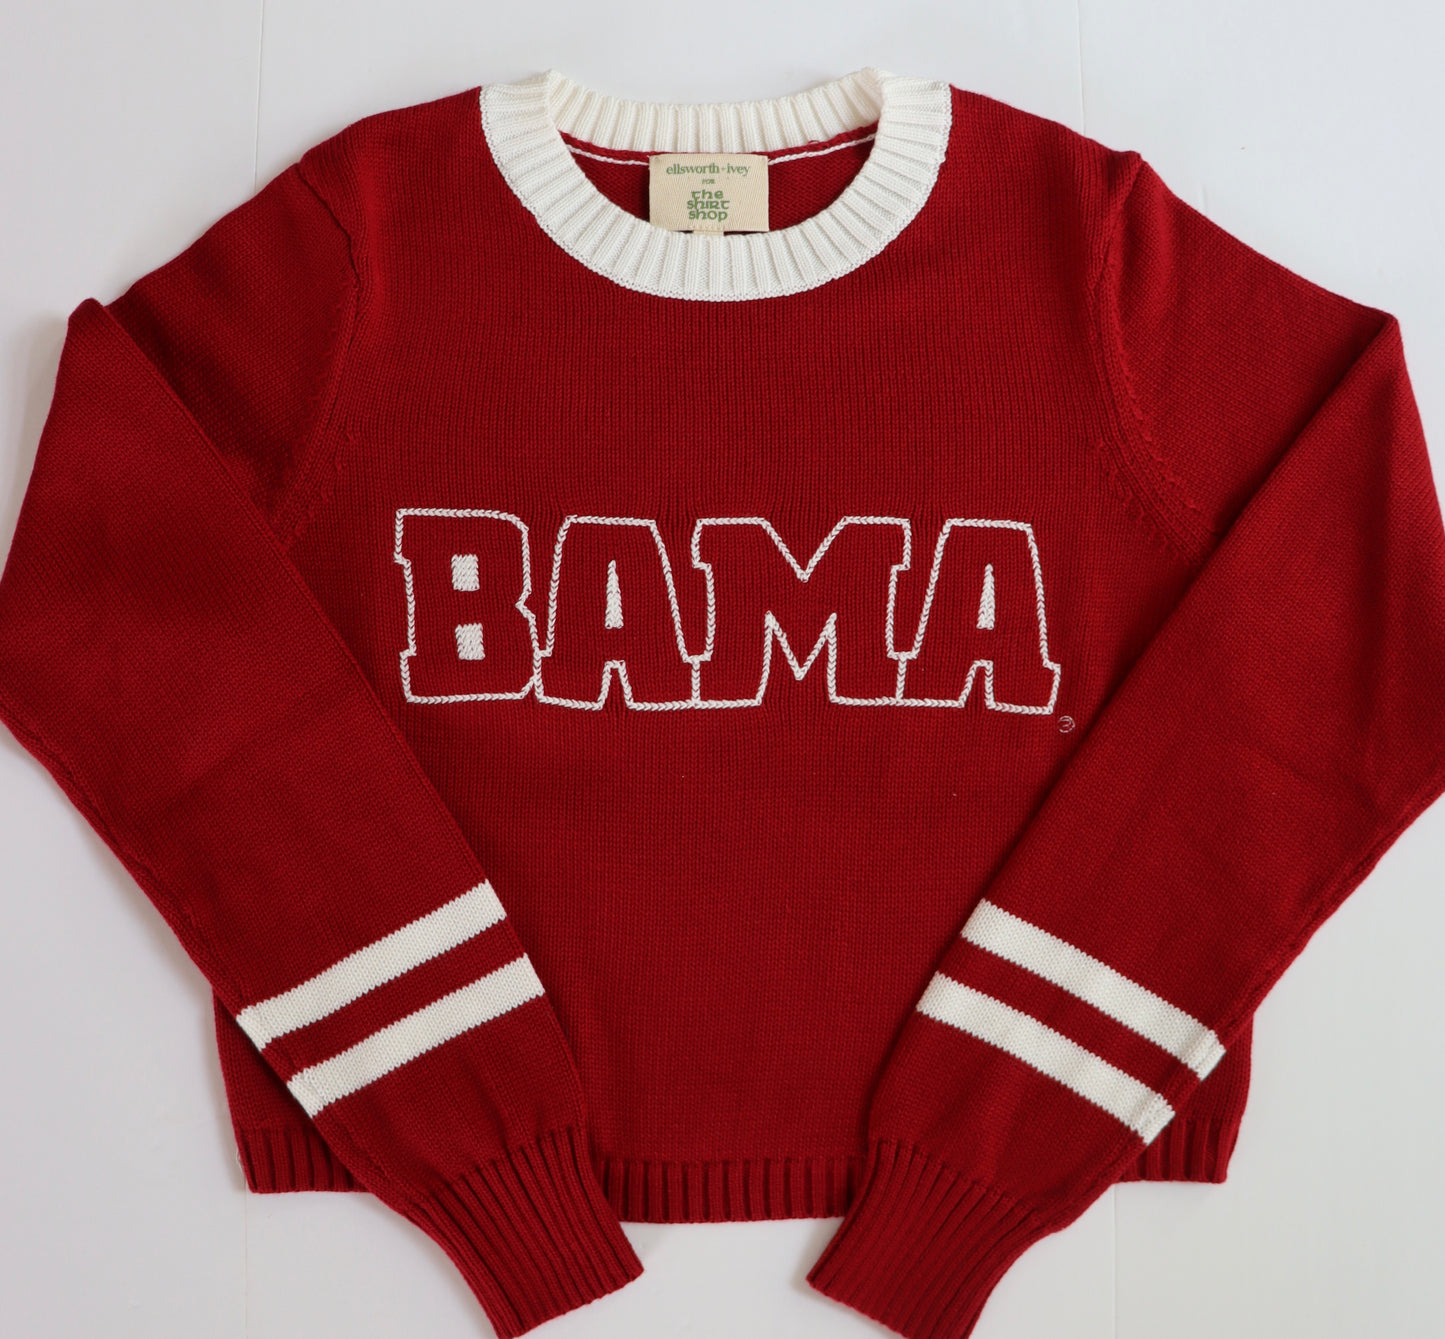 Ellsworth & Ivey Bama Cropped Sweater